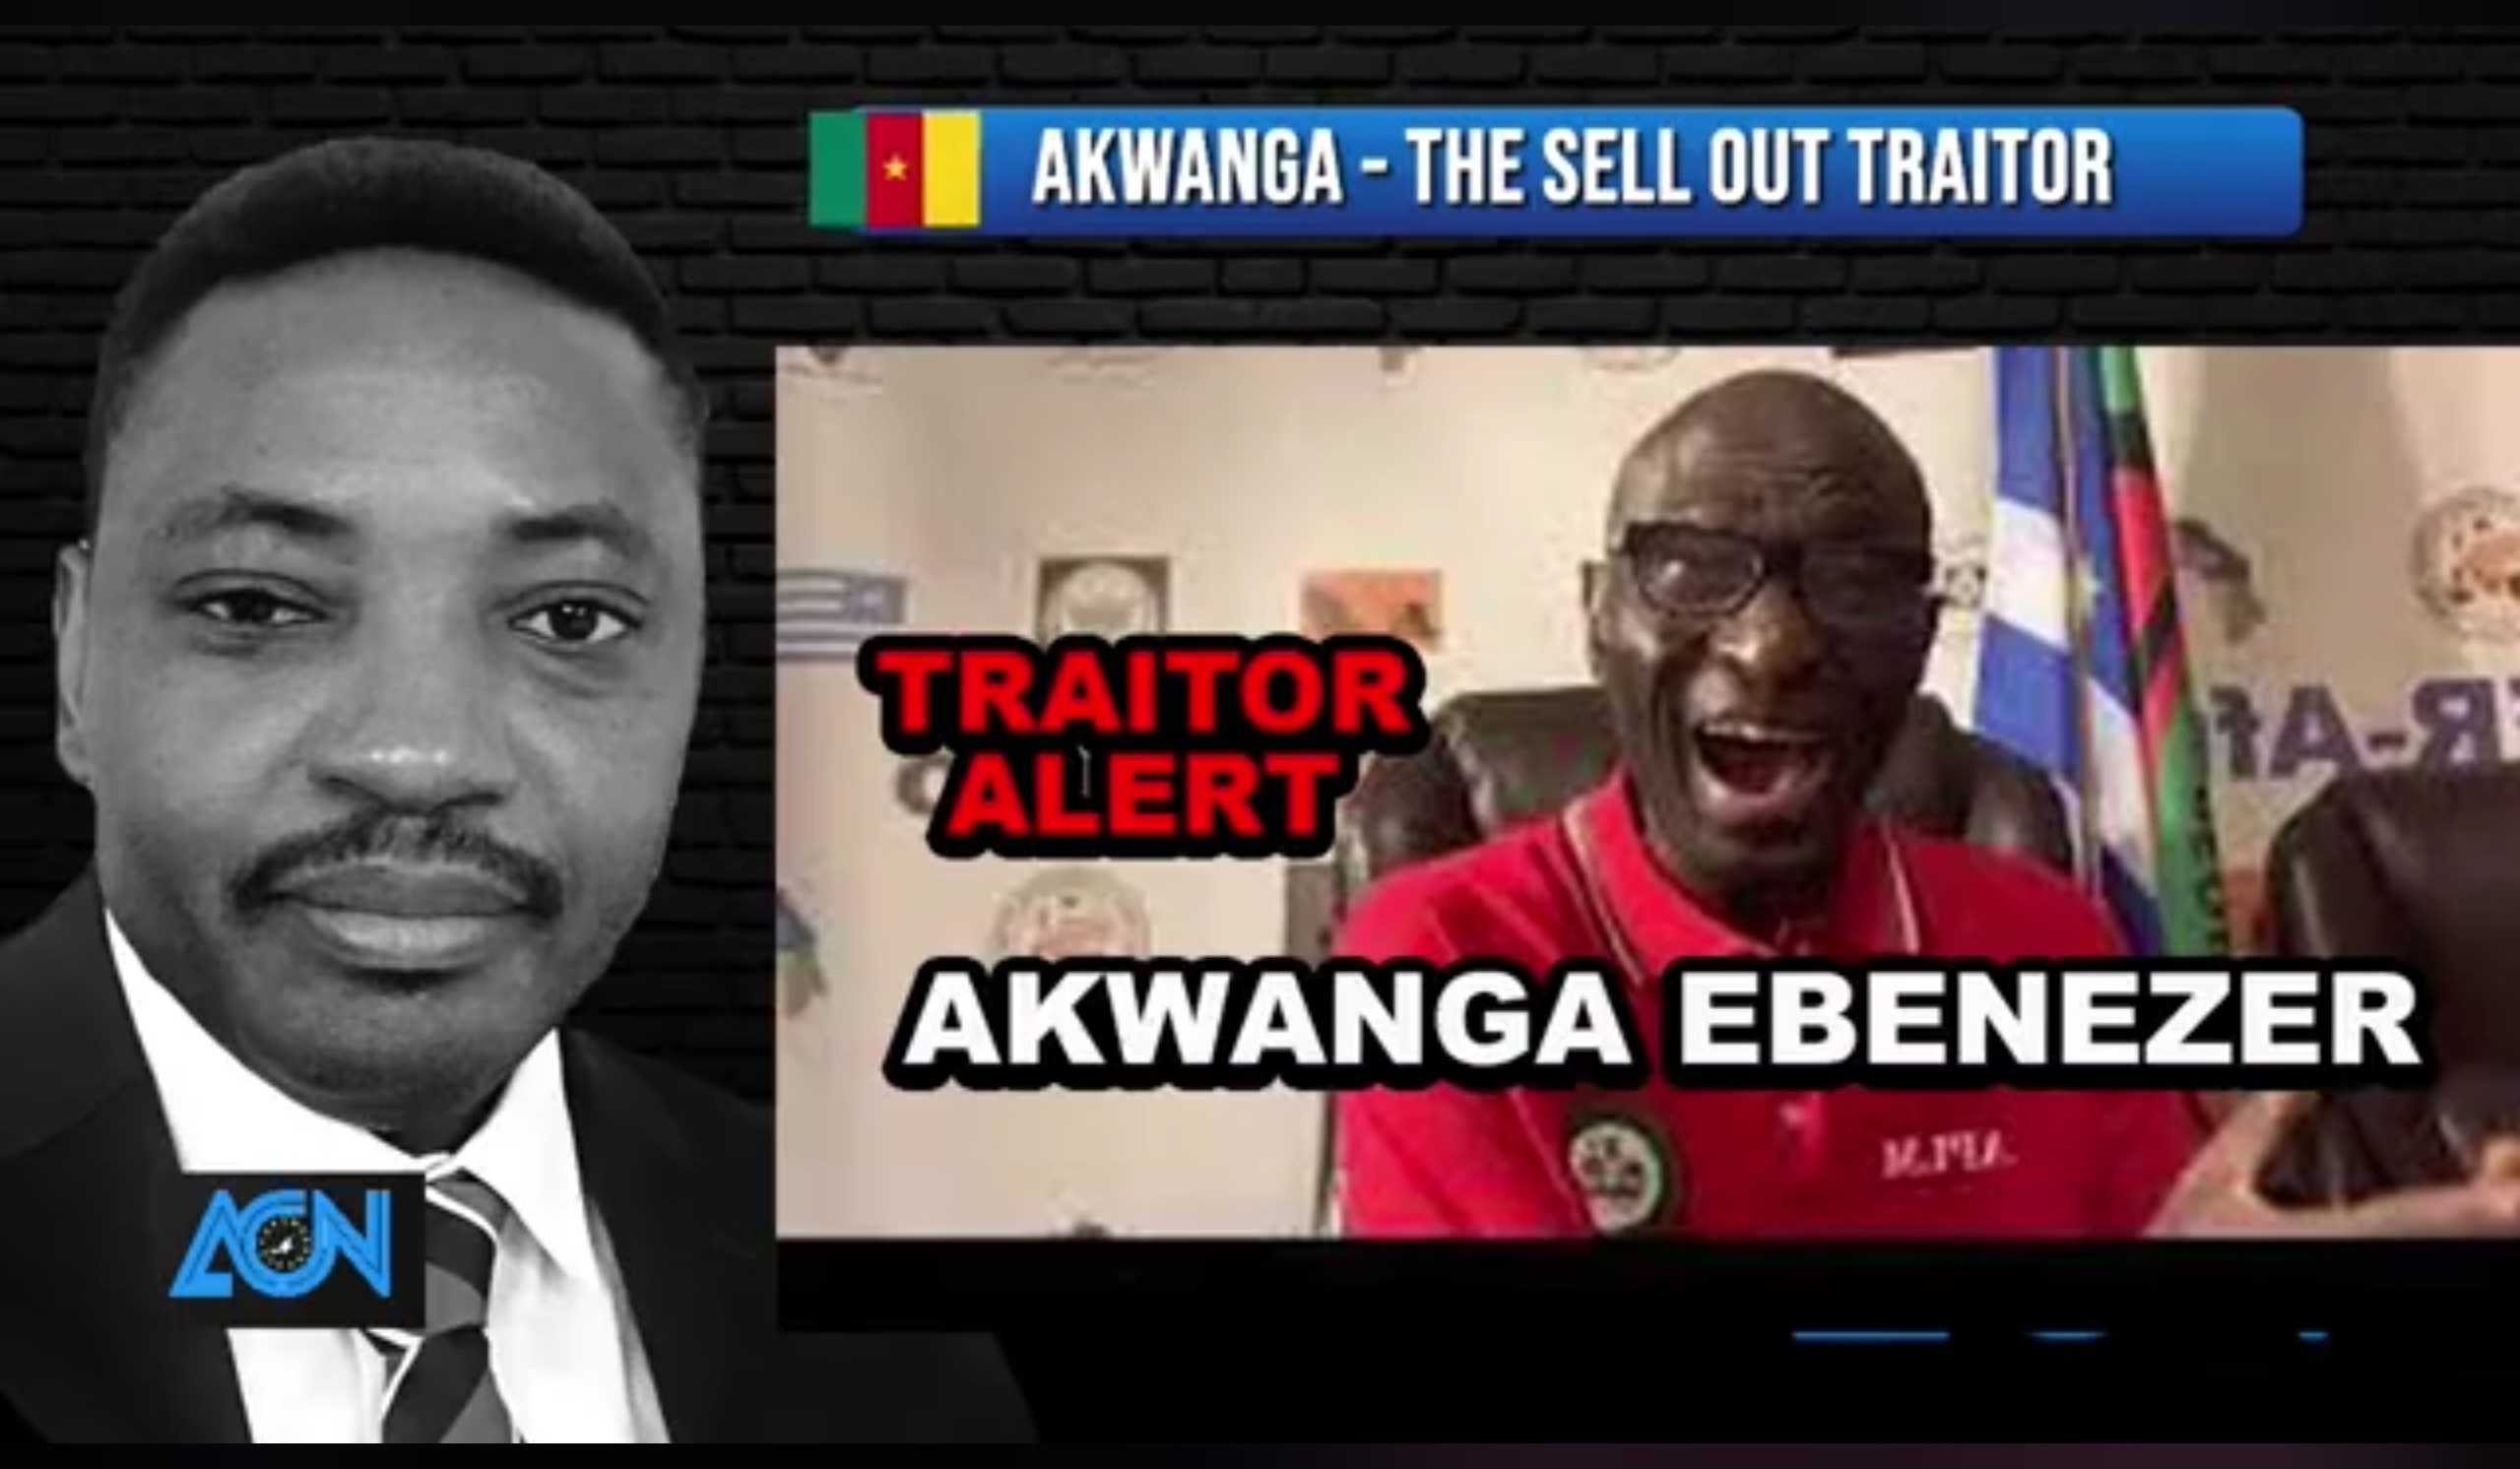 Ebenezer Akwanga is a Traitor, A blackleg, says ADF